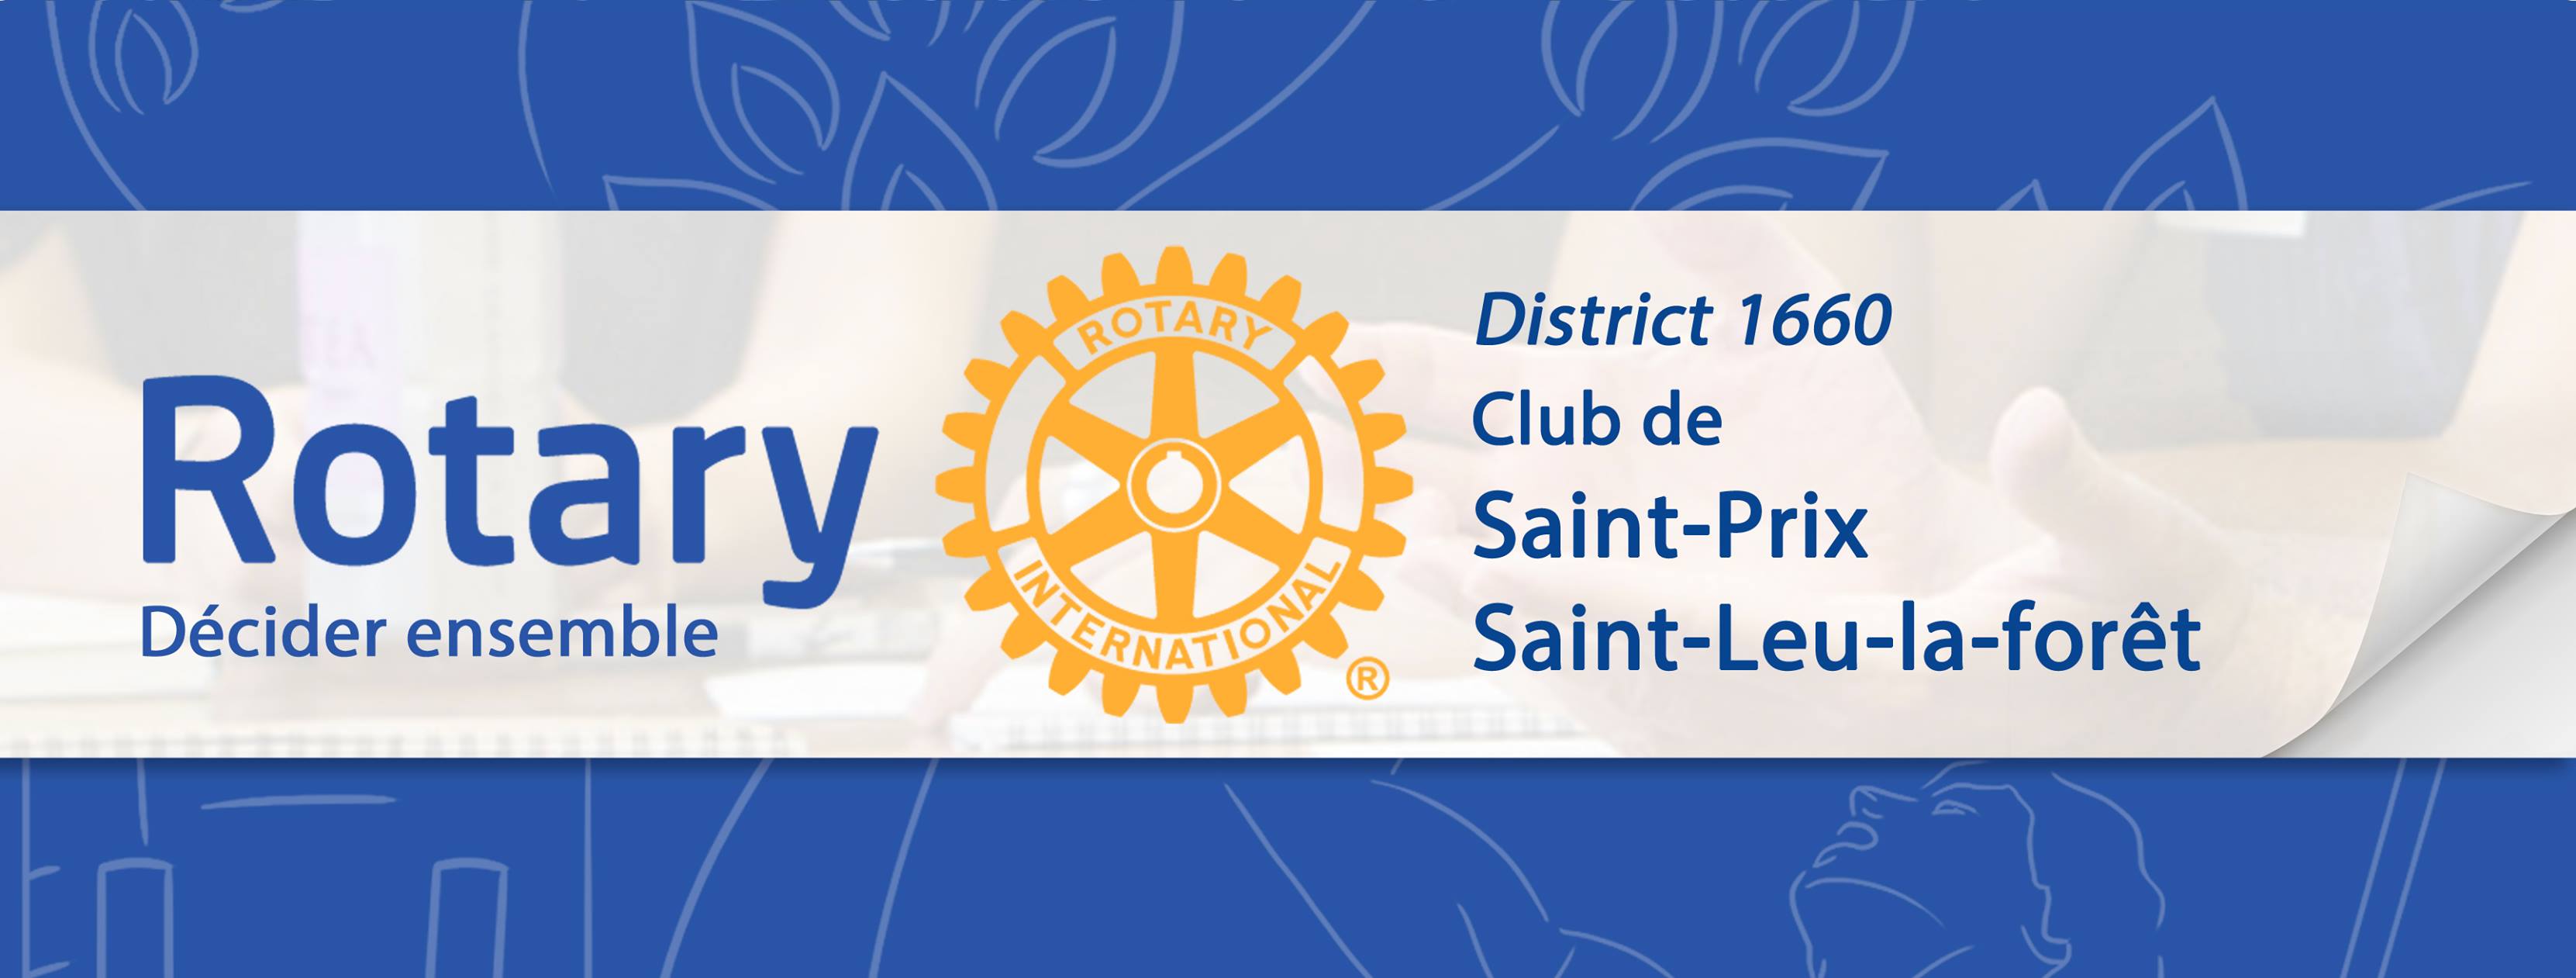 Rotary Club Saint-Prix Saint-Leu